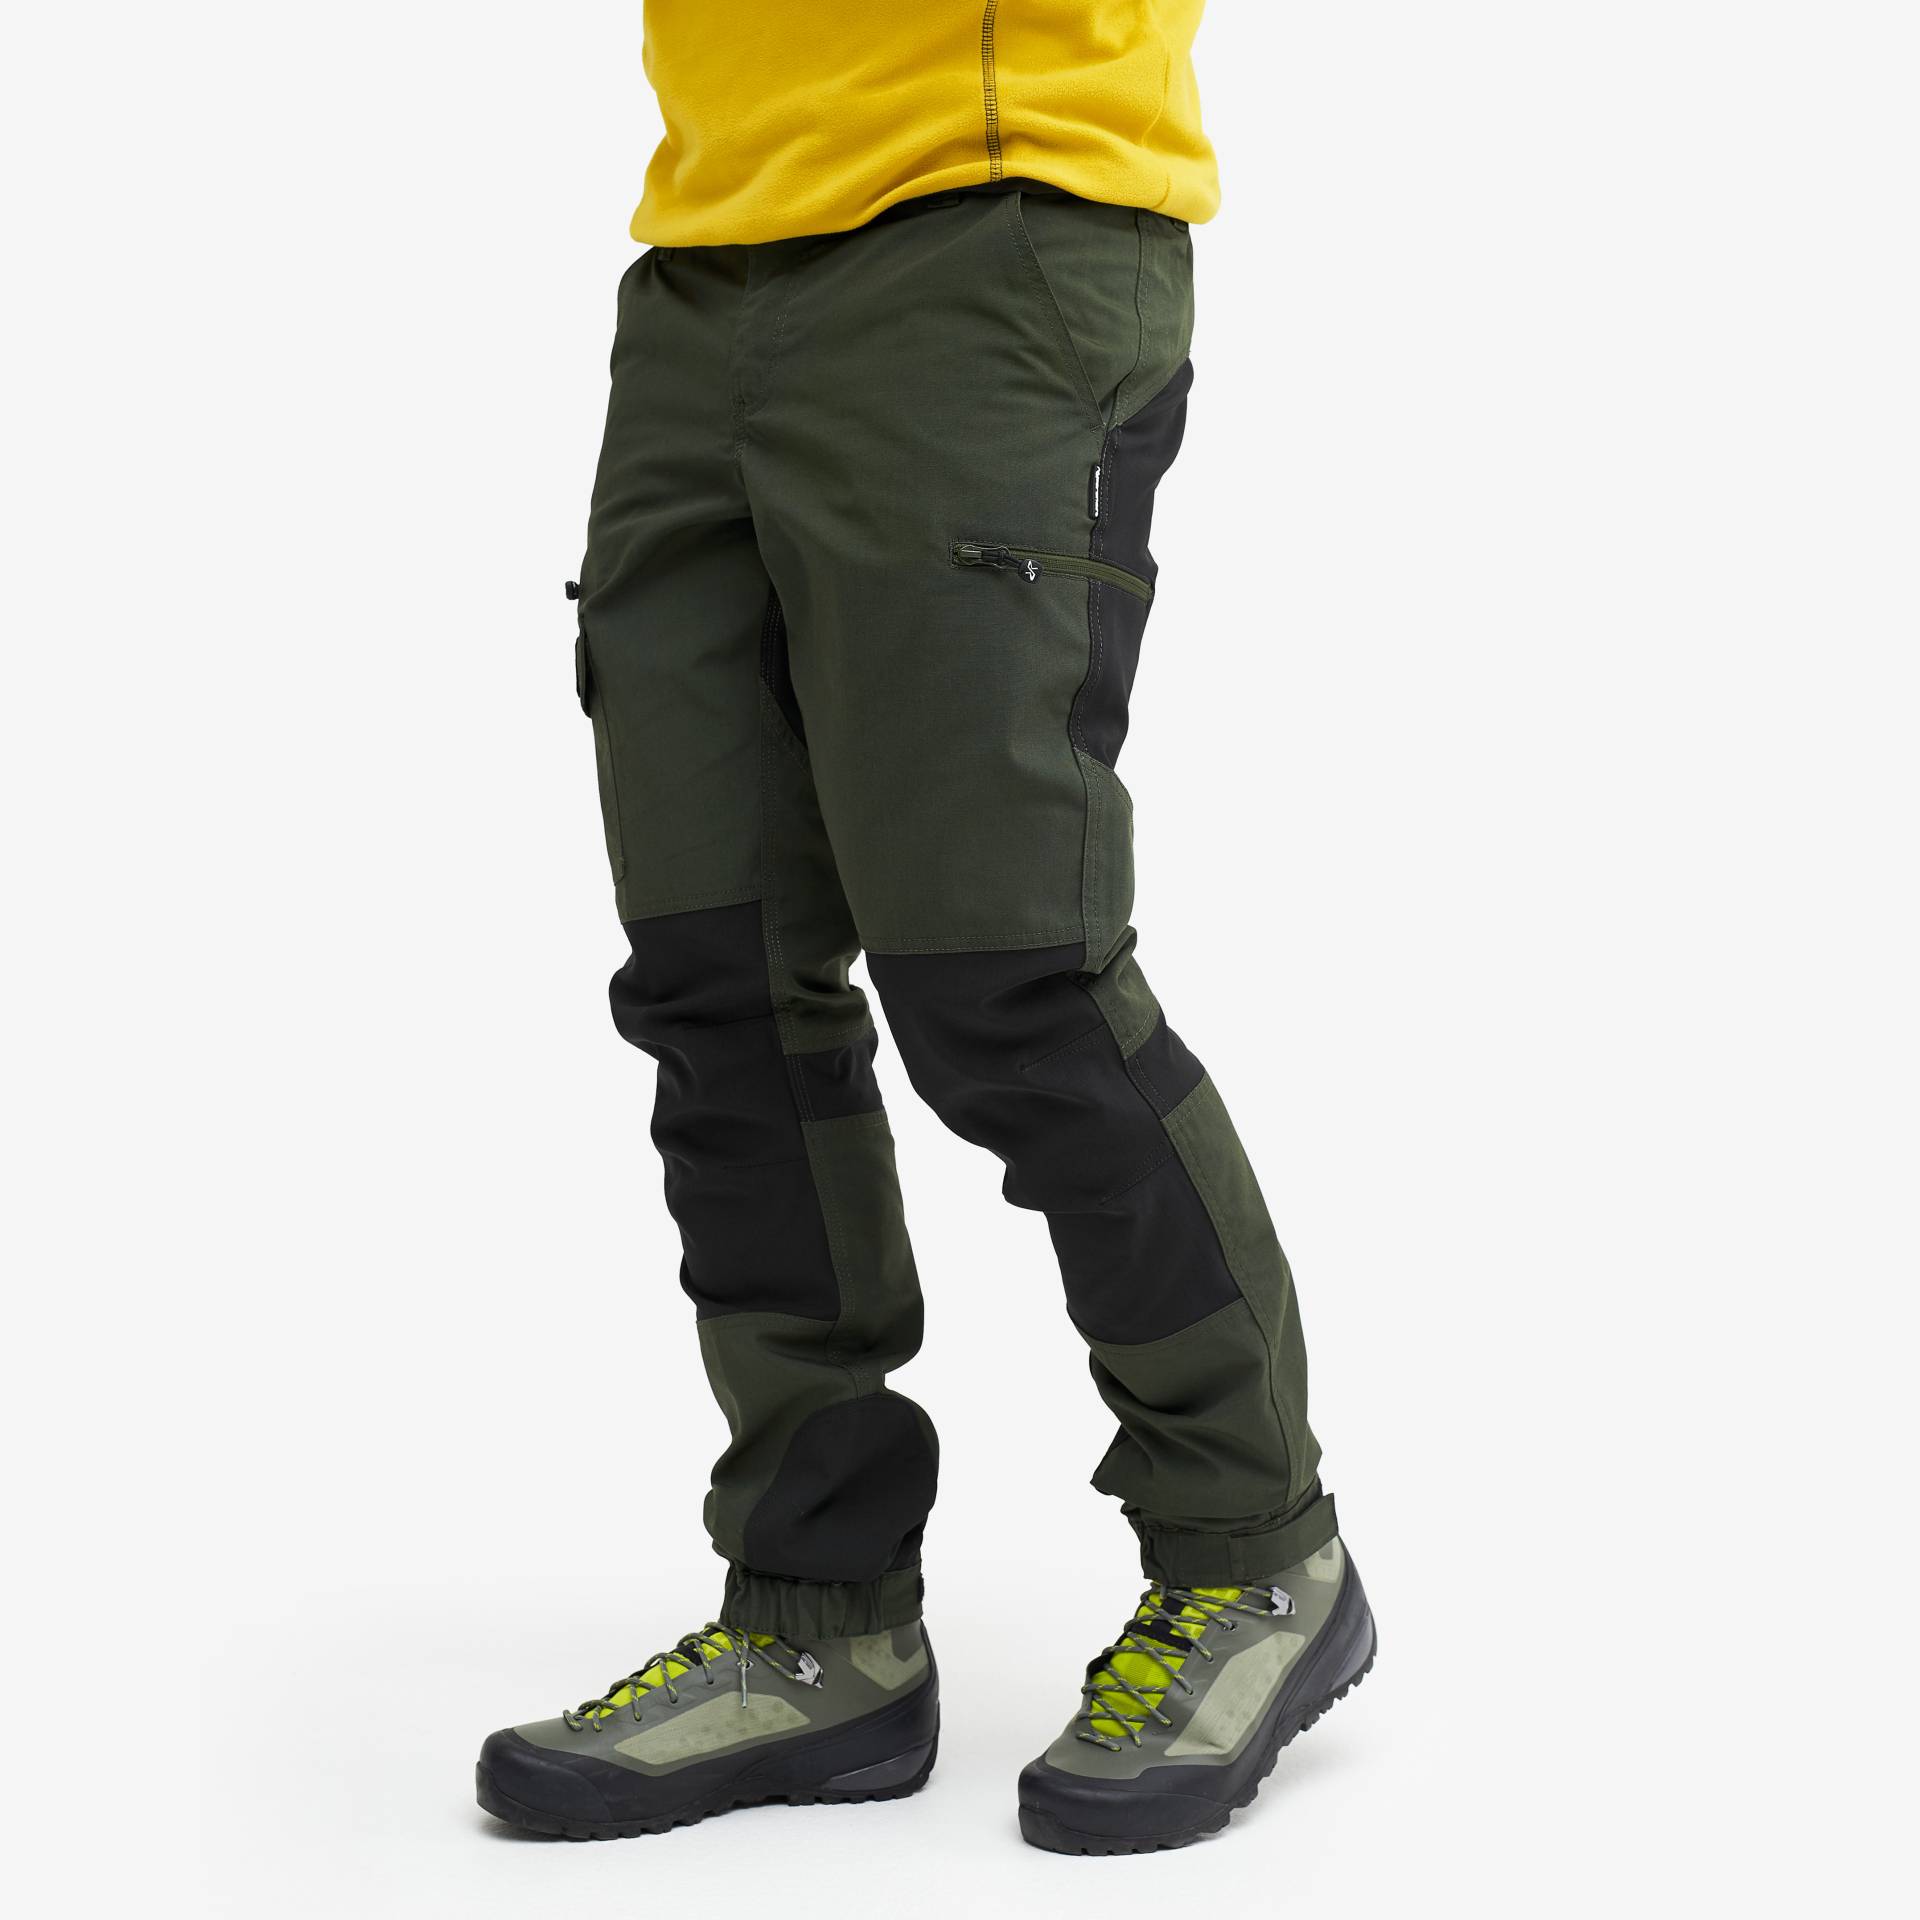 Nordwand Pants Herren Forest Green, Größe:XS - Outdoorhose, Wanderhose & Trekkinghose von RevolutionRace